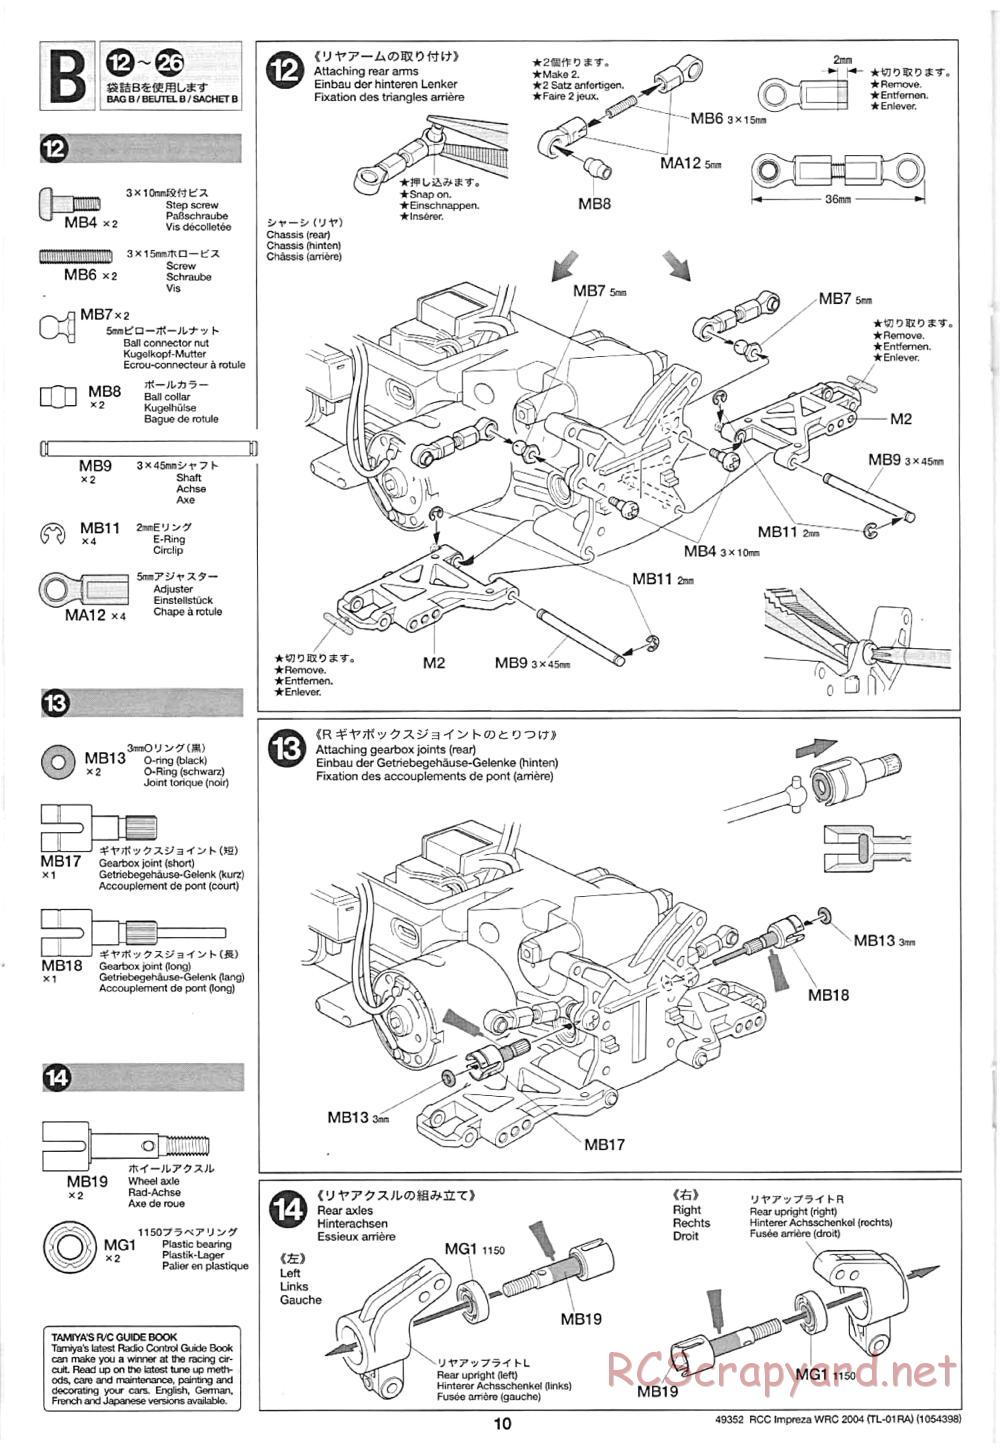 Tamiya - Subaru Impreza WRC 2004 Chassis - Manual - Page 10